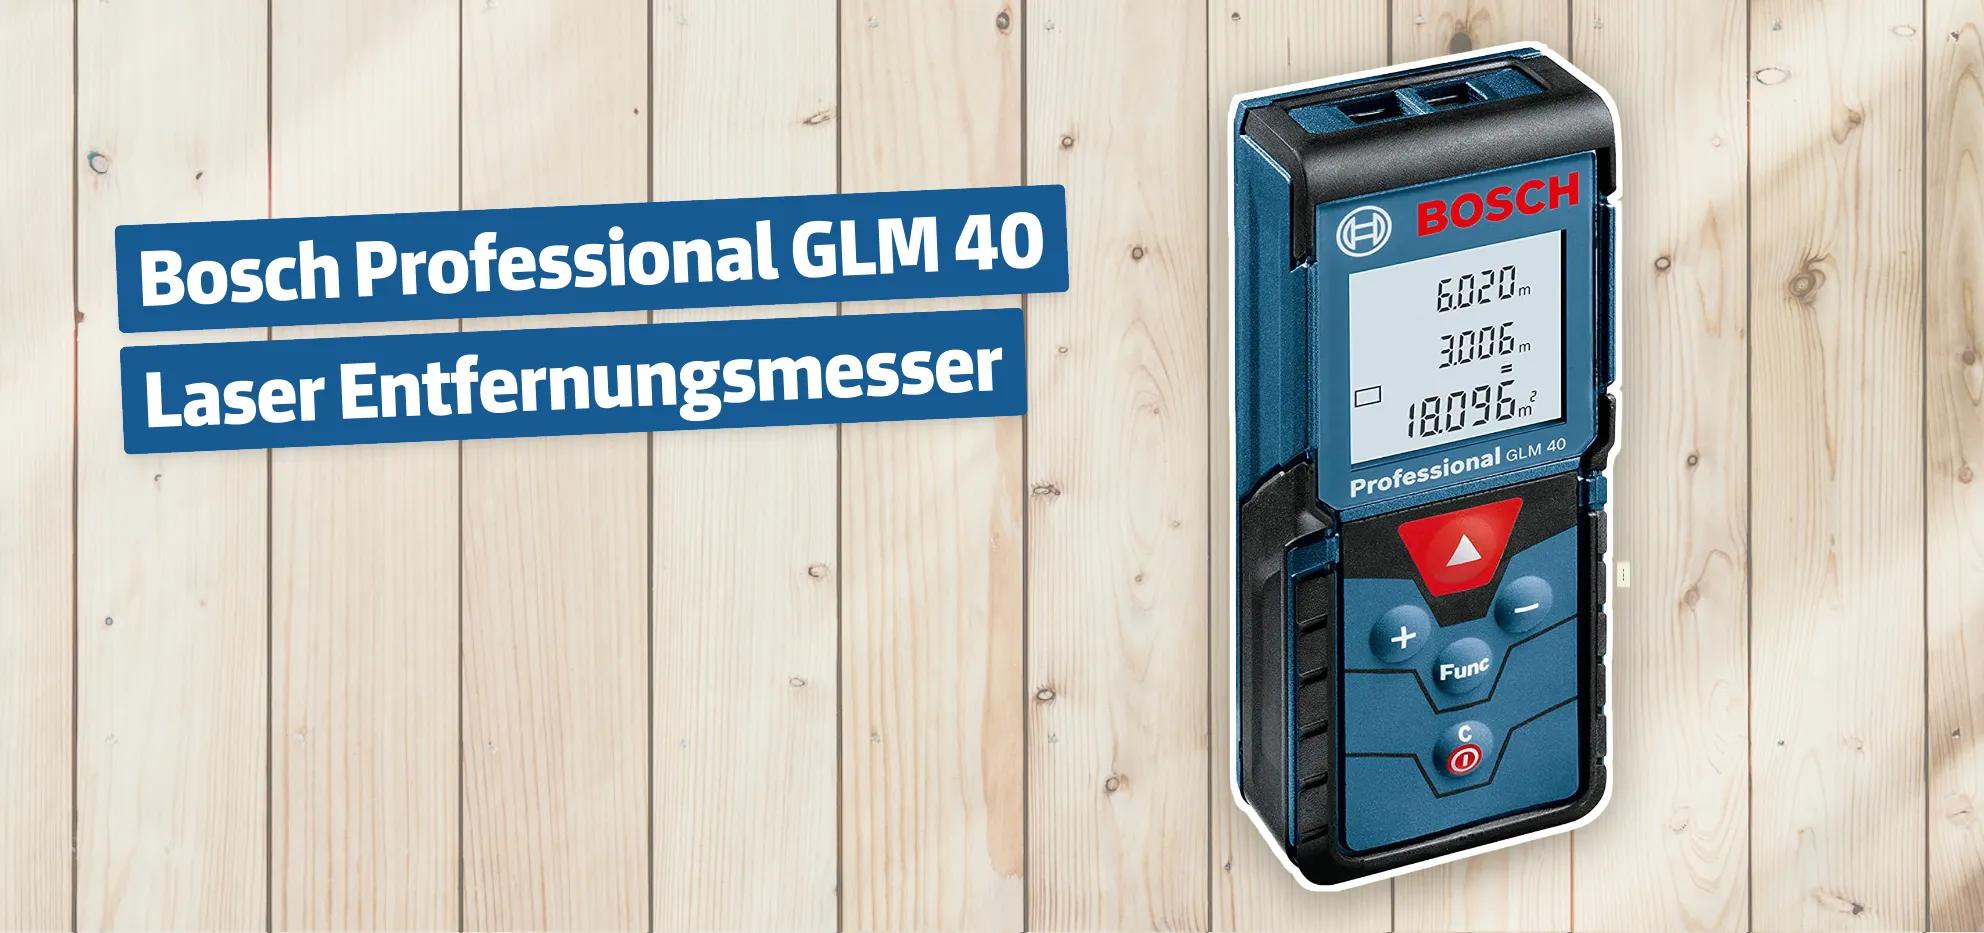 Bosch Professional GLM 40 Laser Entfernungsmesser